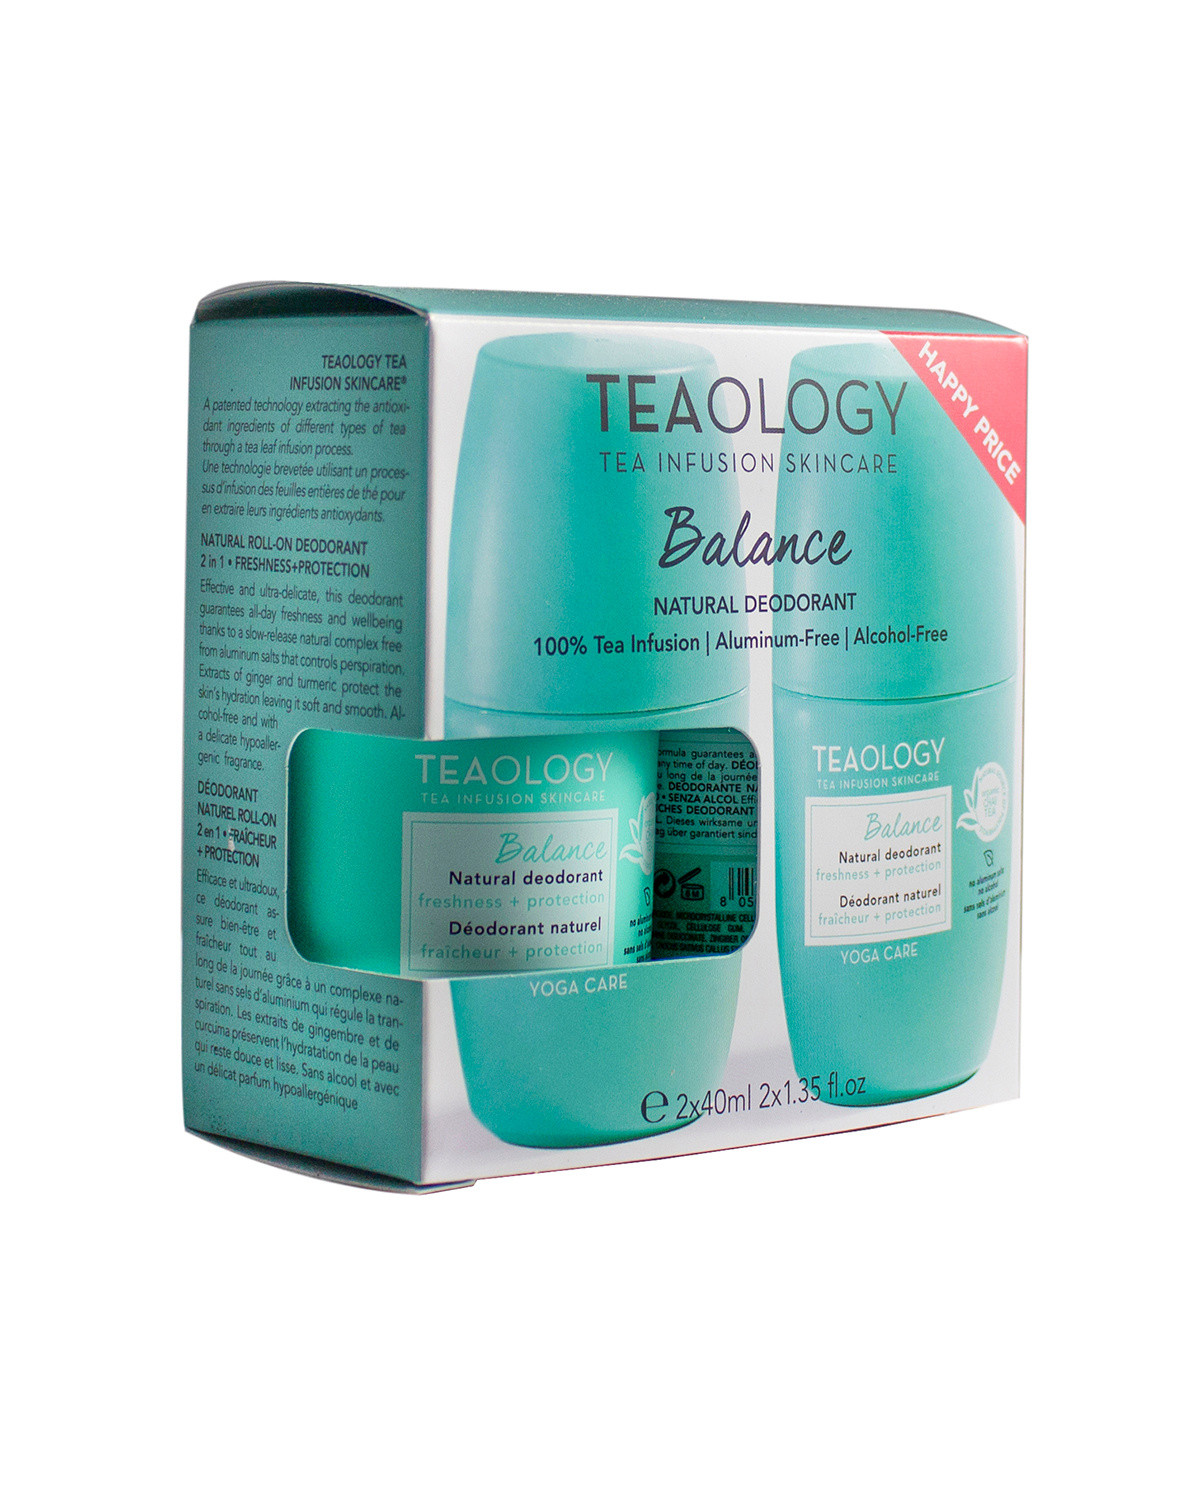 Teaology - DUO yoga care balance natural deodorant, Light Blue, large image number 1